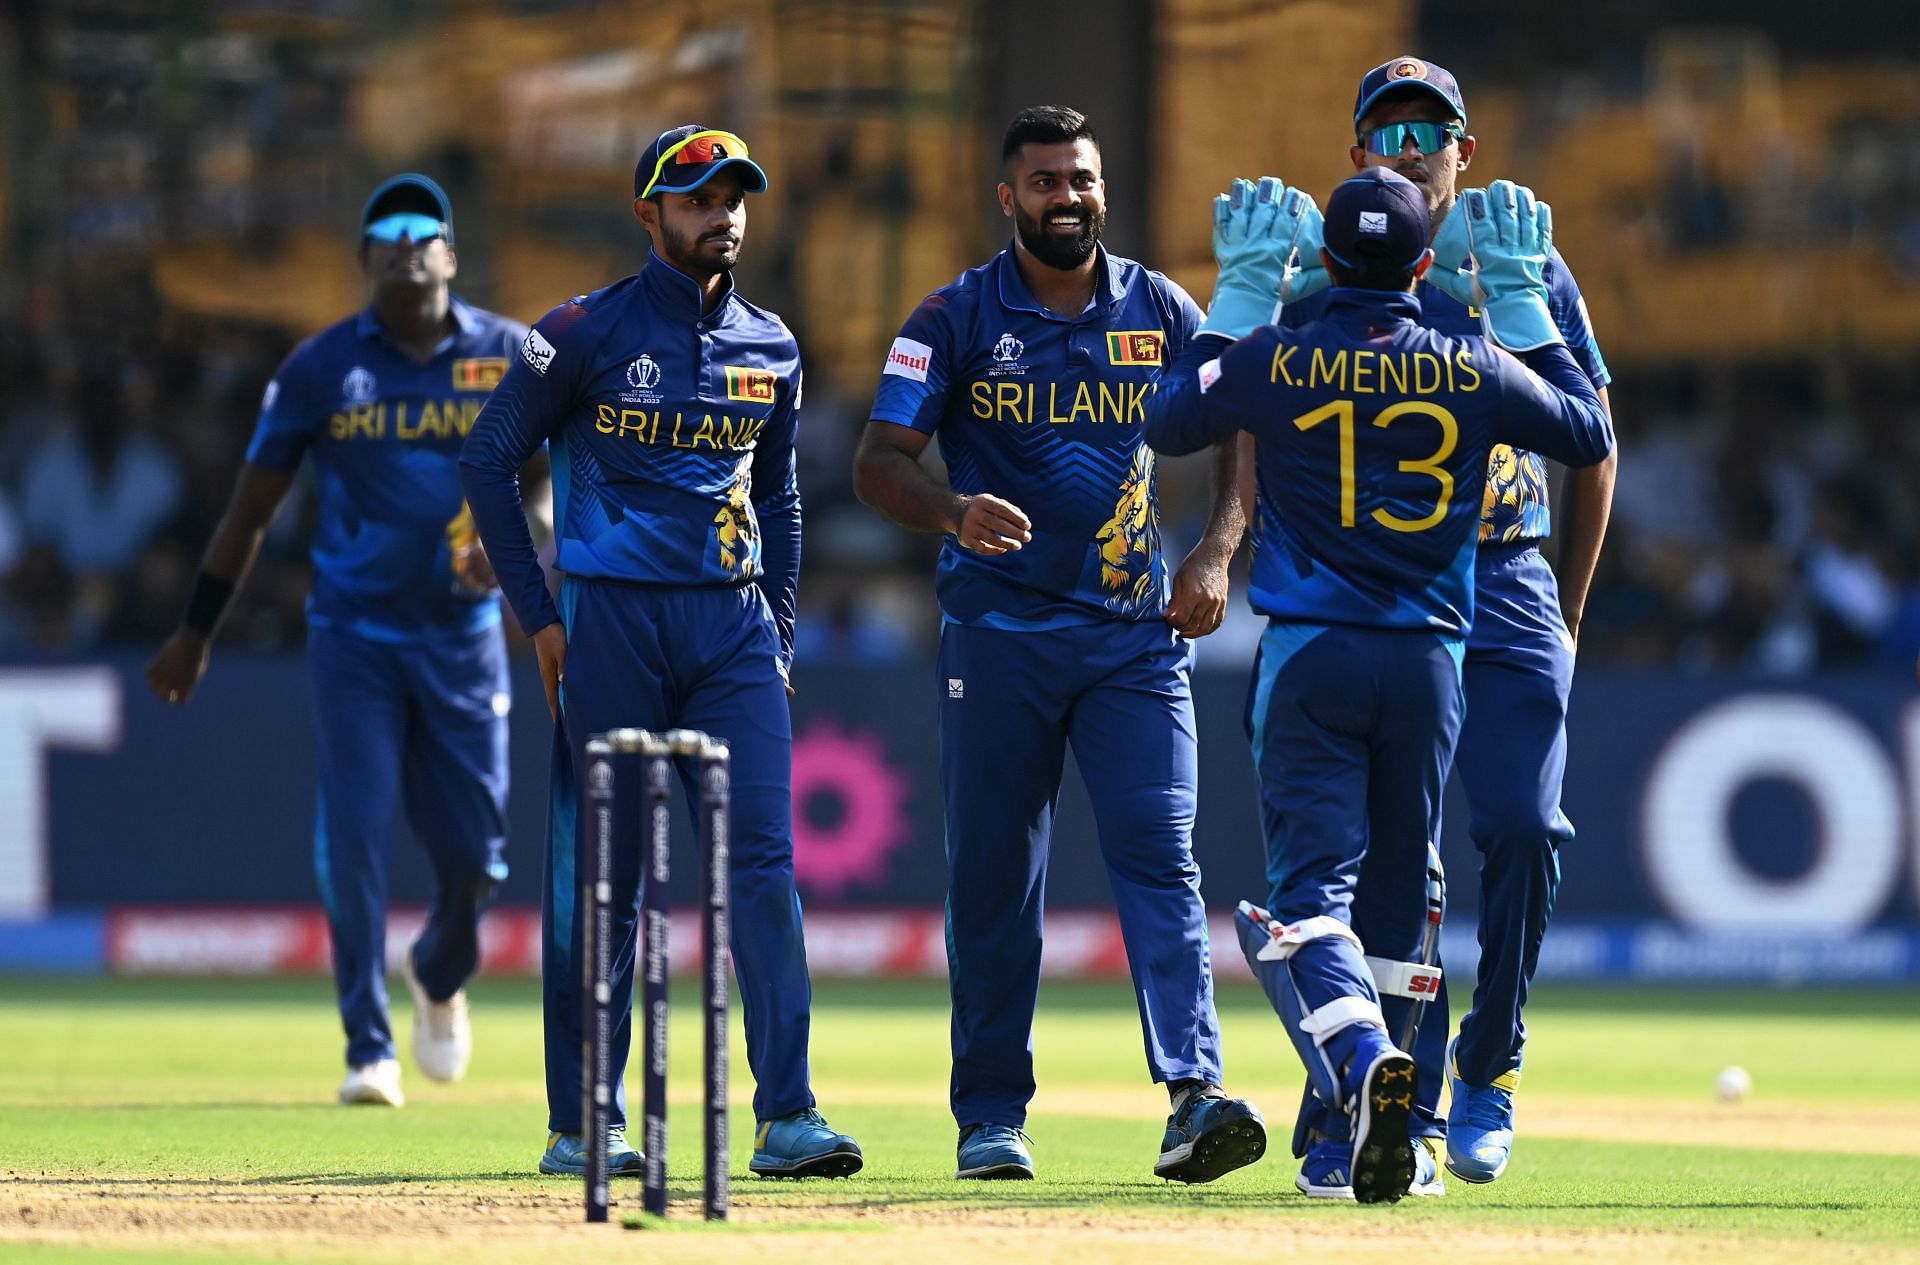 Sri Lanka national cricket team. (Credits: Getty)